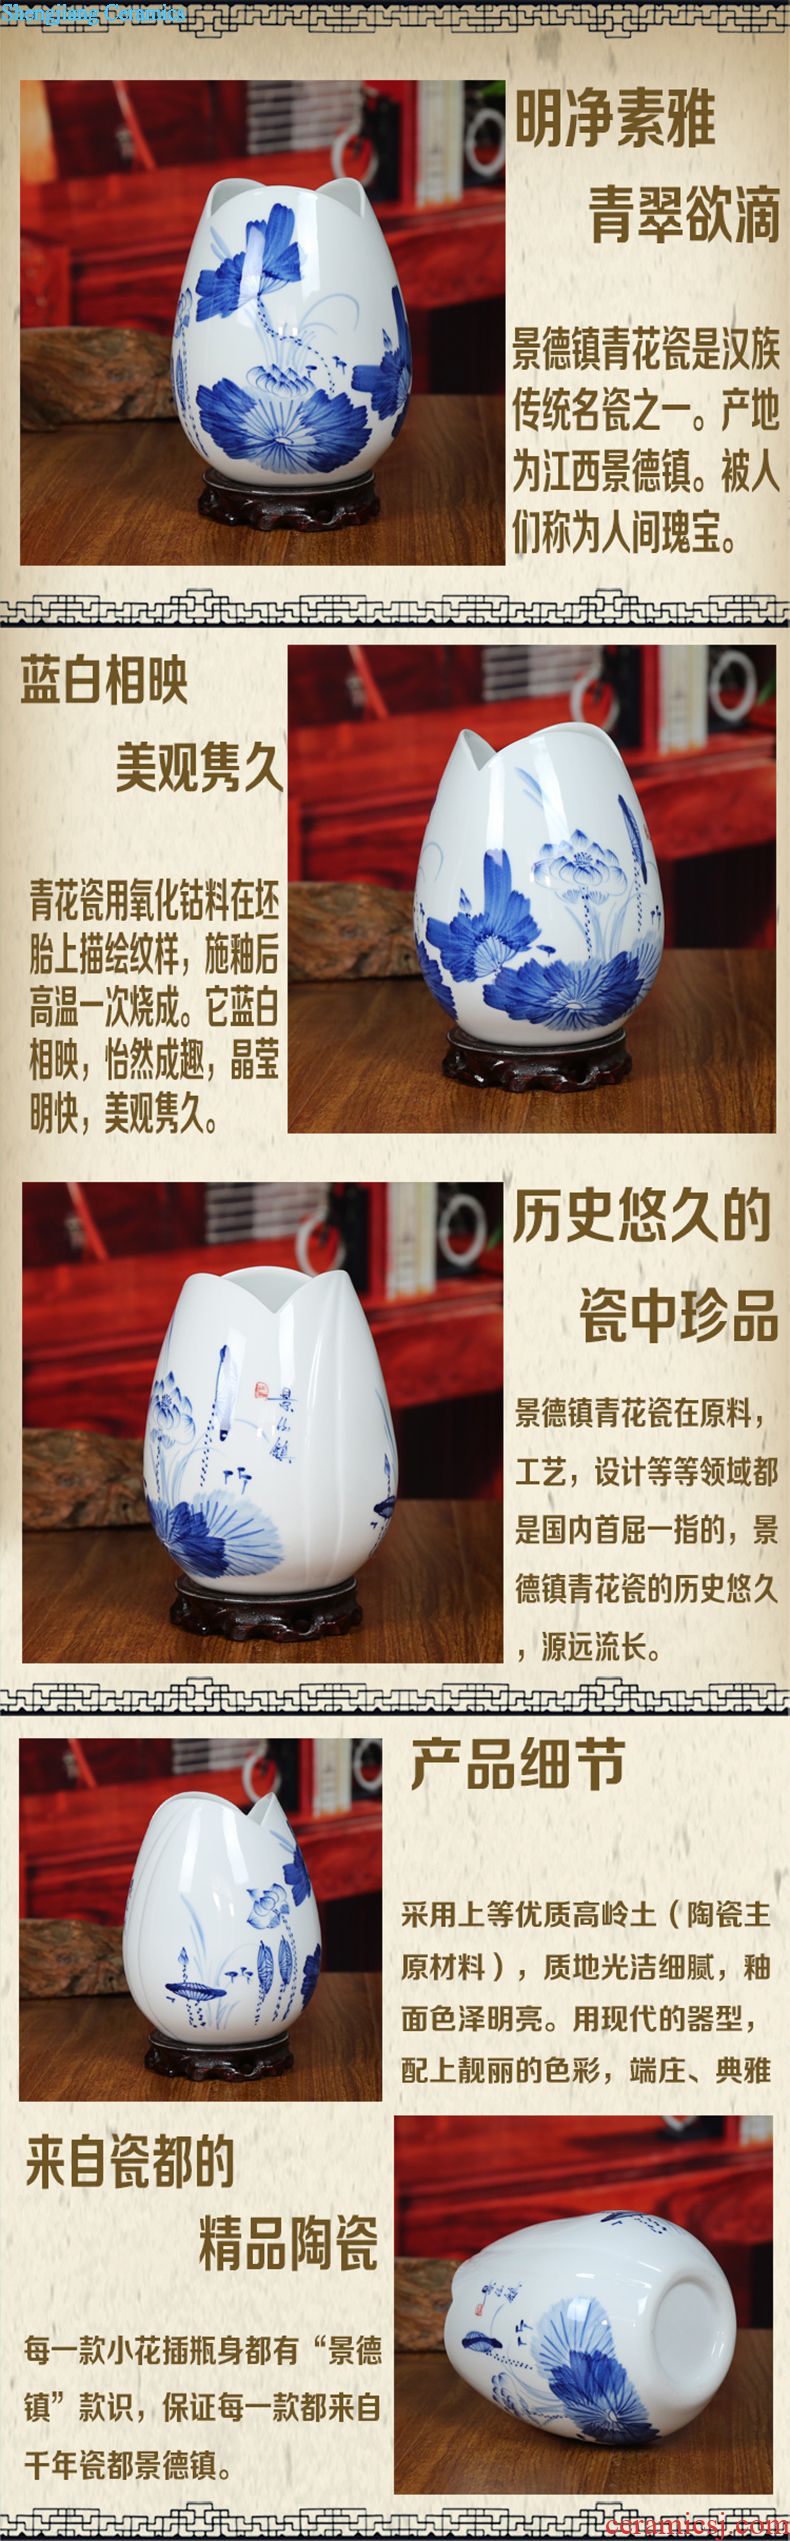 Jingdezhen ceramic vases, Chinese red modern home sitting room place gold peony handicraft housewarming gift